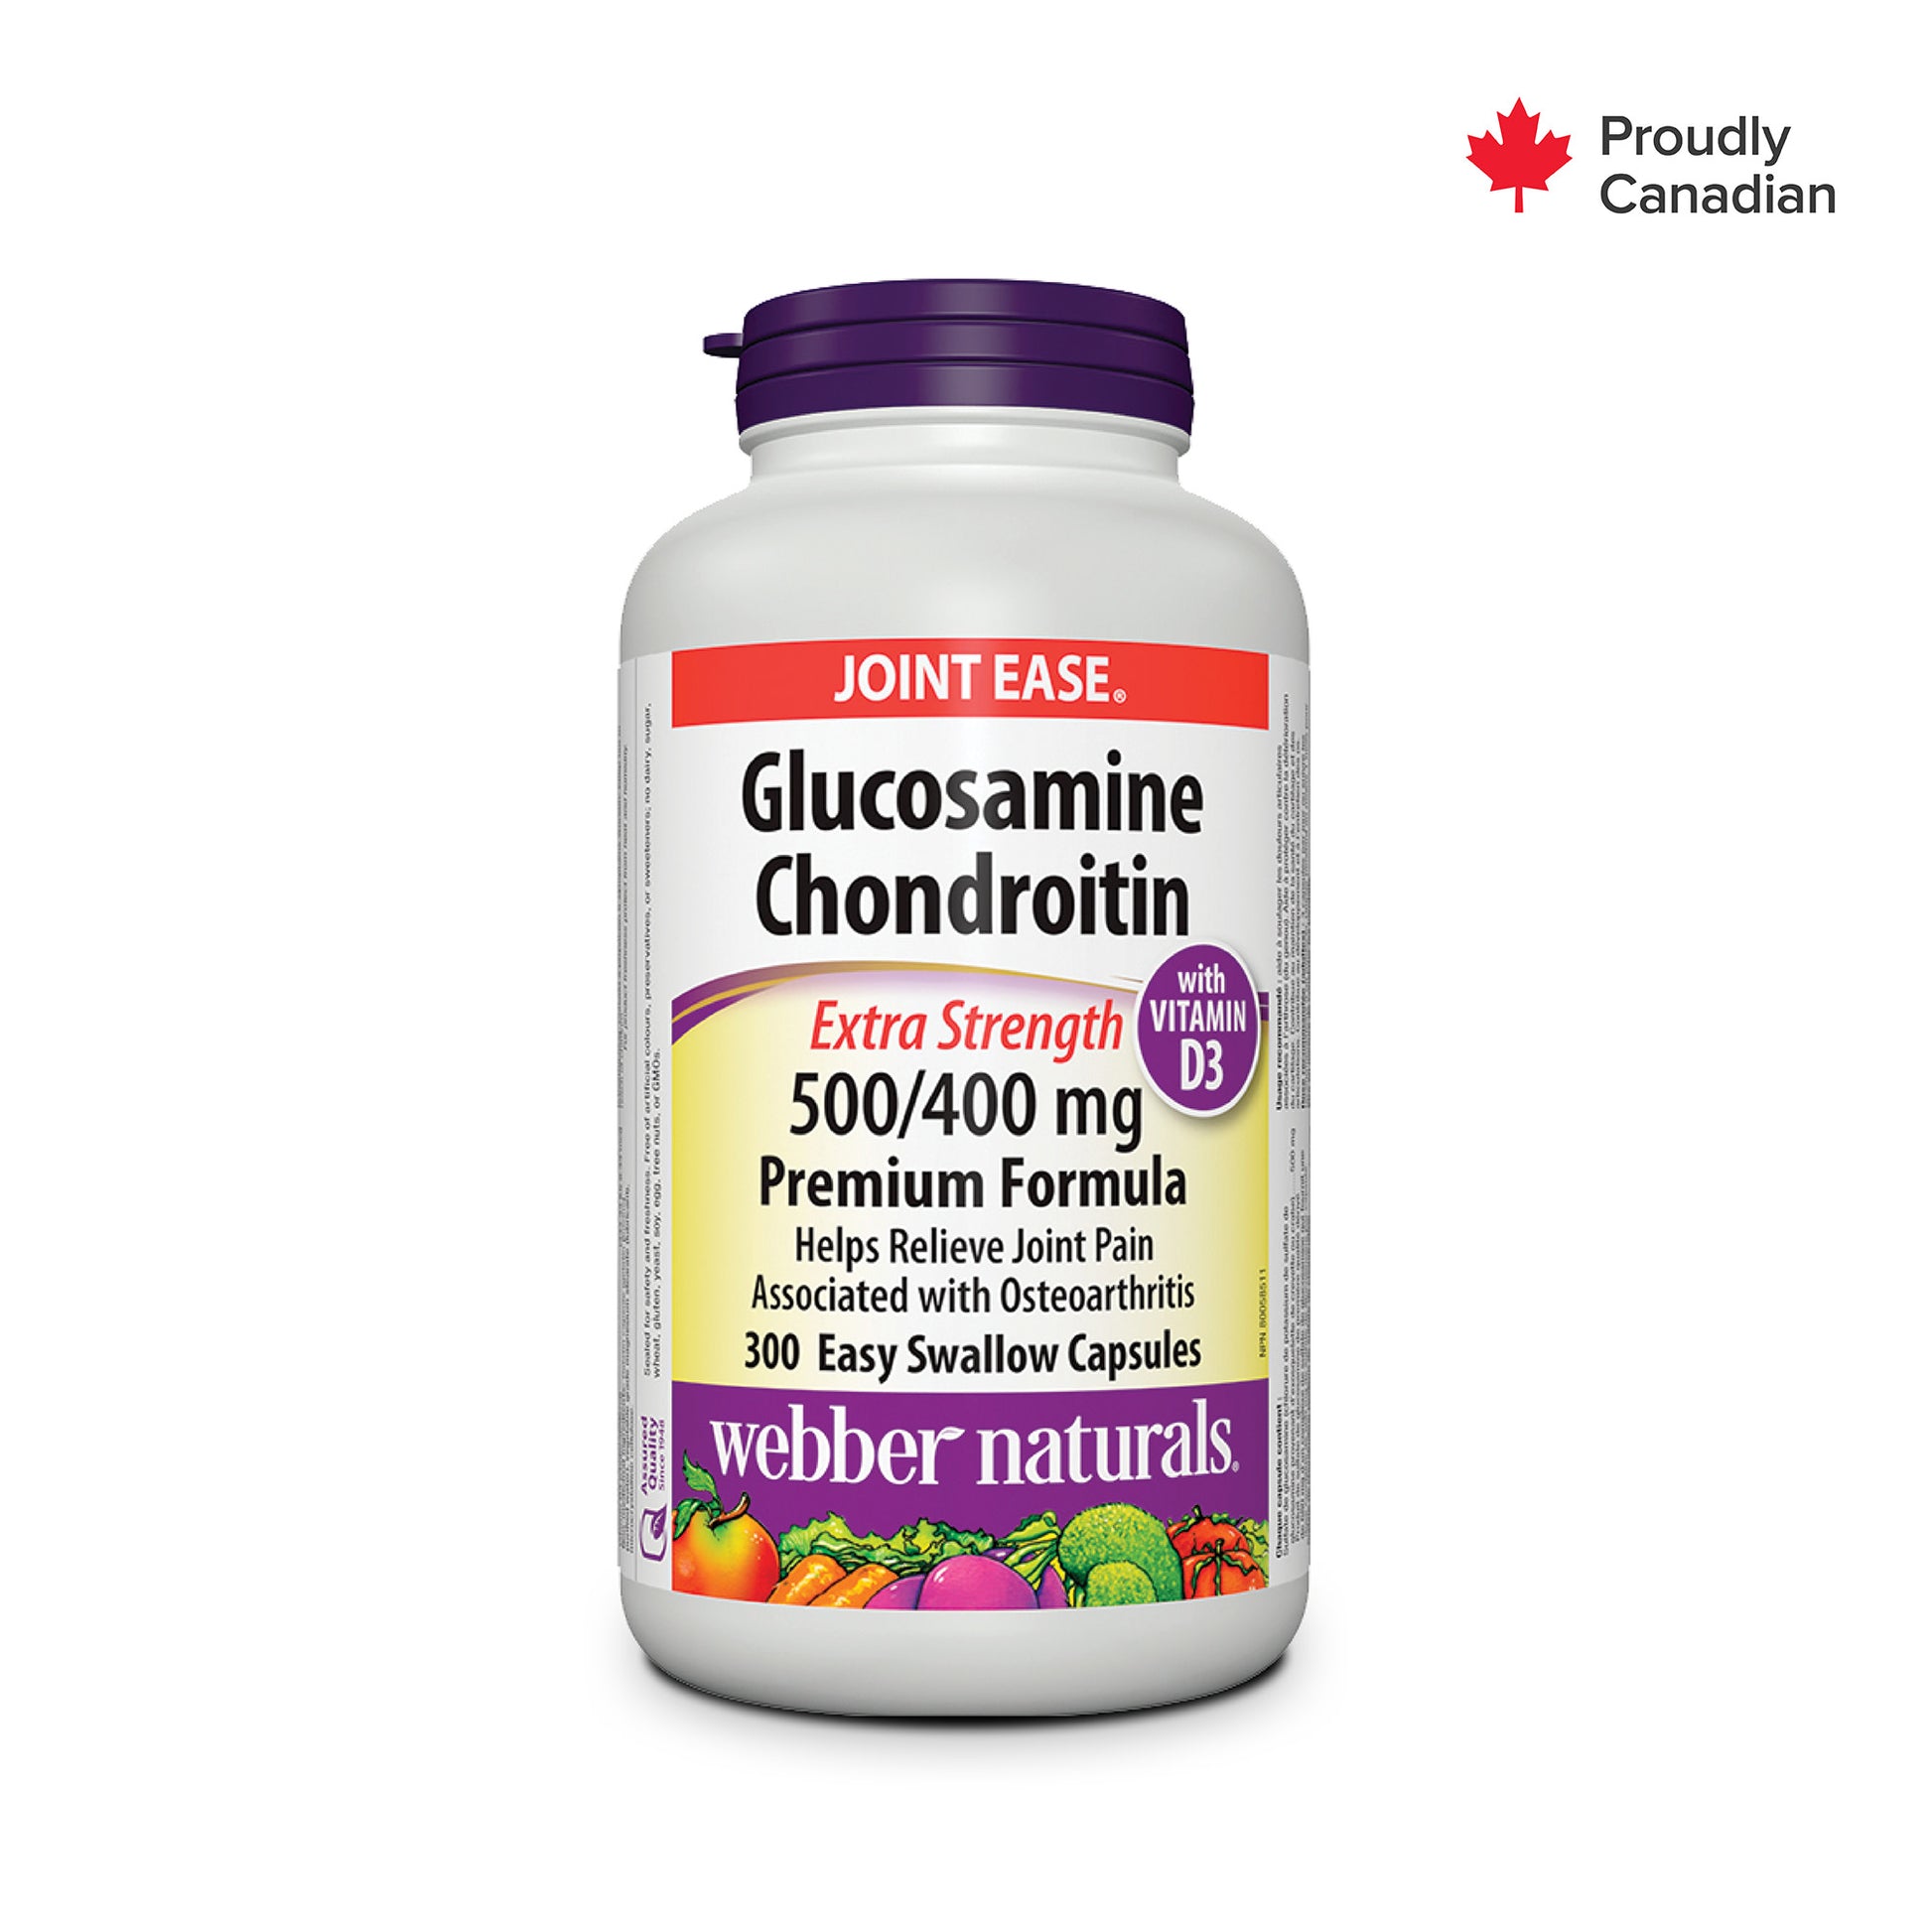 Glucosamine Chondroïtine Extra-fort avec vitamine D3 500/400 mg caplets for Webber Naturals|v|hi-res|WN5255